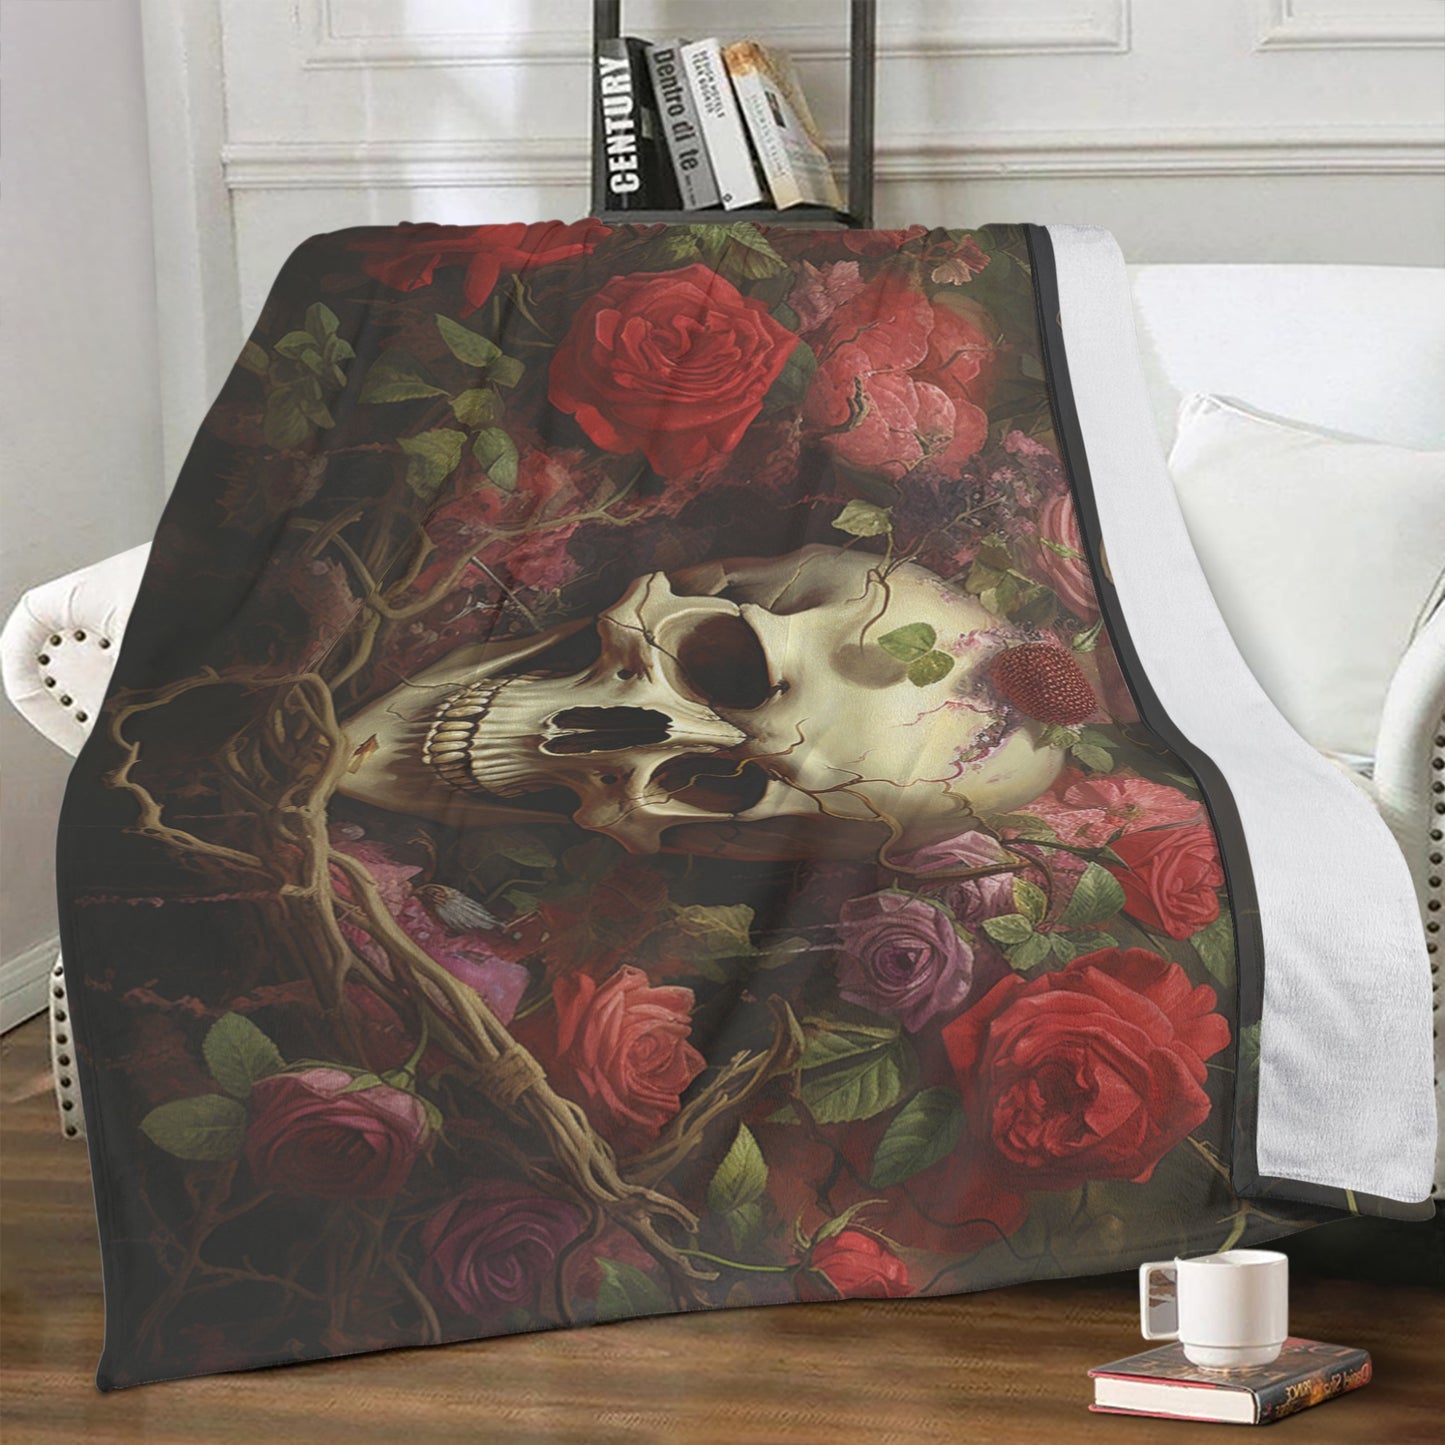 Neduz Rose Skull Gothic Art Luxe Suede Blanket | Cozy Home Accents